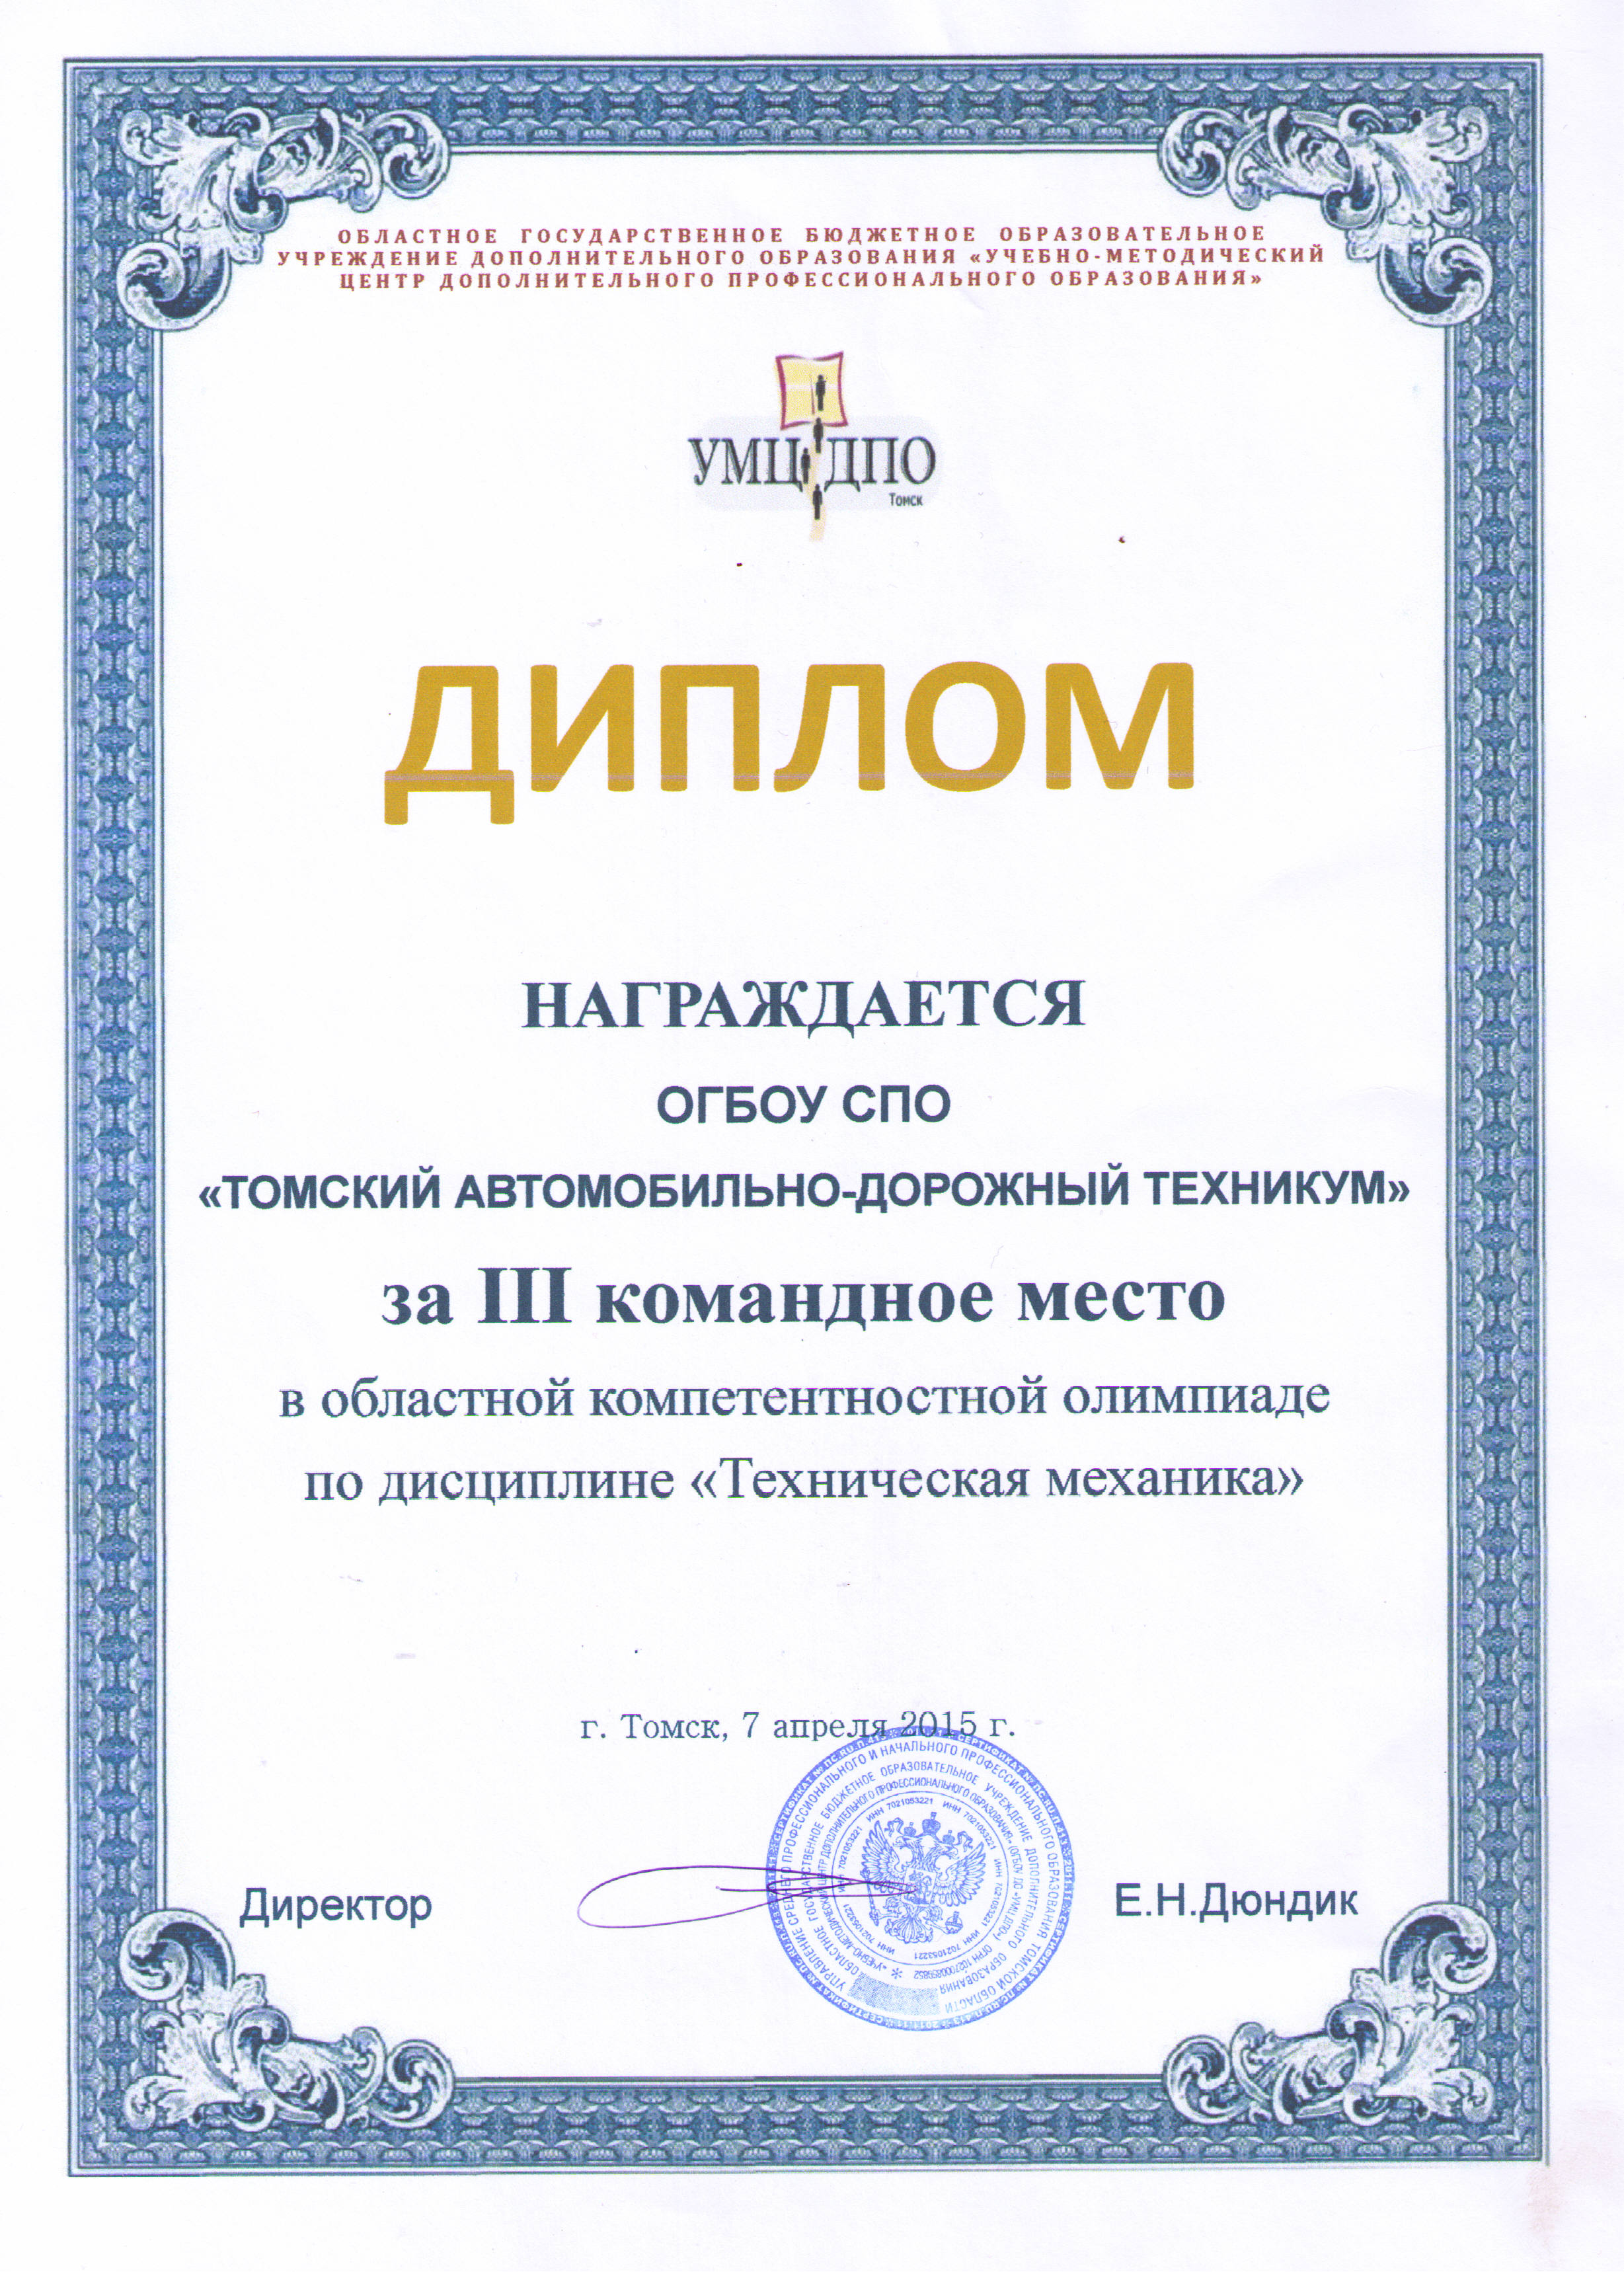 Олимпиада тех.мех. 7 апреля 2015г.